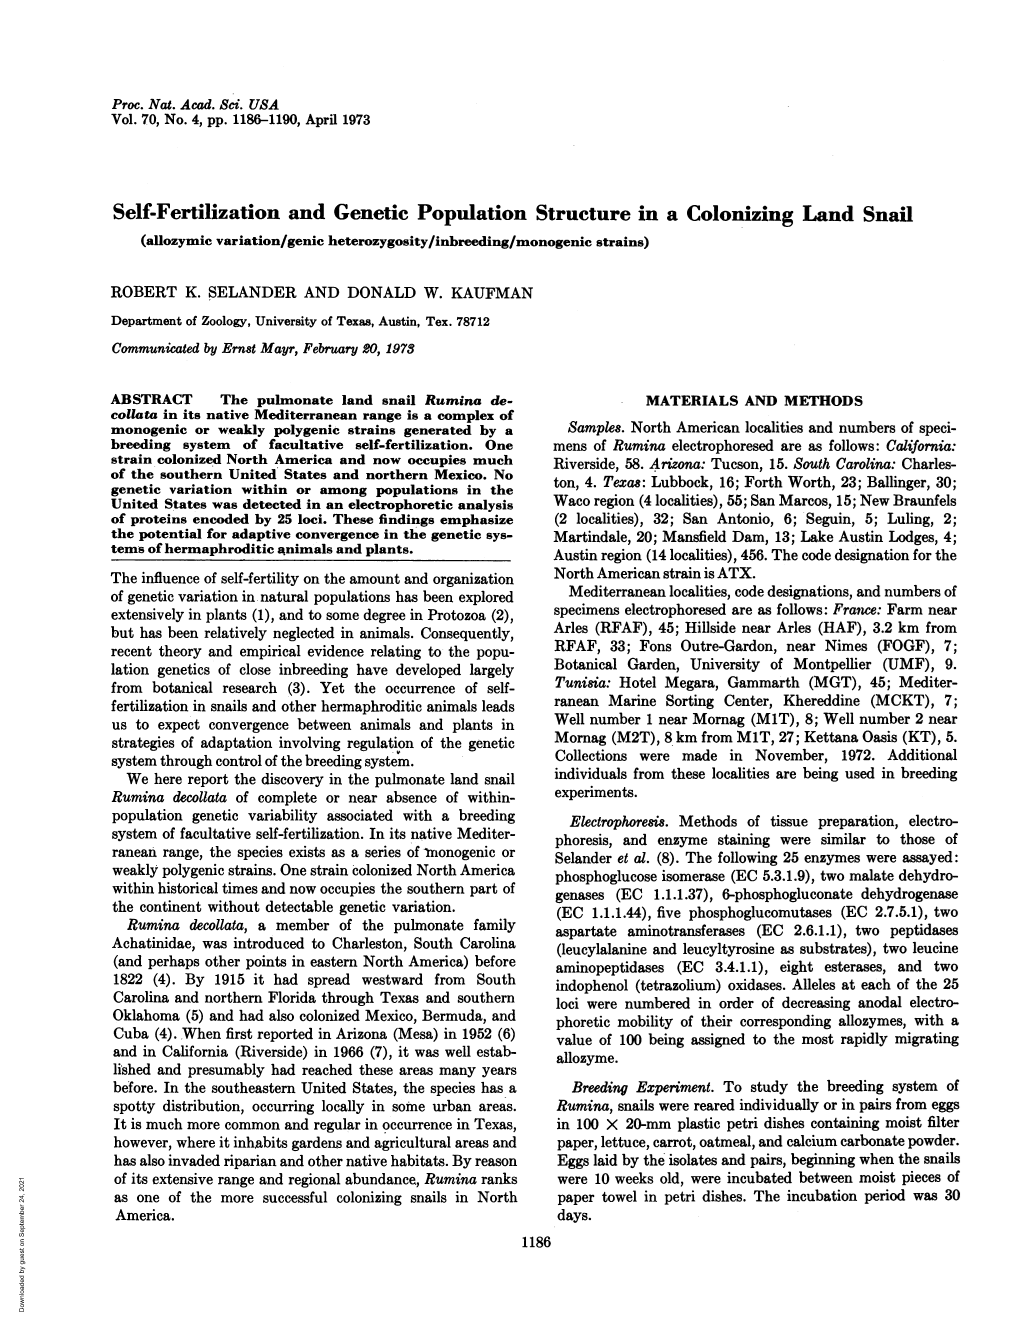 Self-Fertilization and Genetic Population Structure in a Colonizing Land Snail (Allozymic Variation/Genic Heterozygosity/Inbreeding/Monogenic Strains)